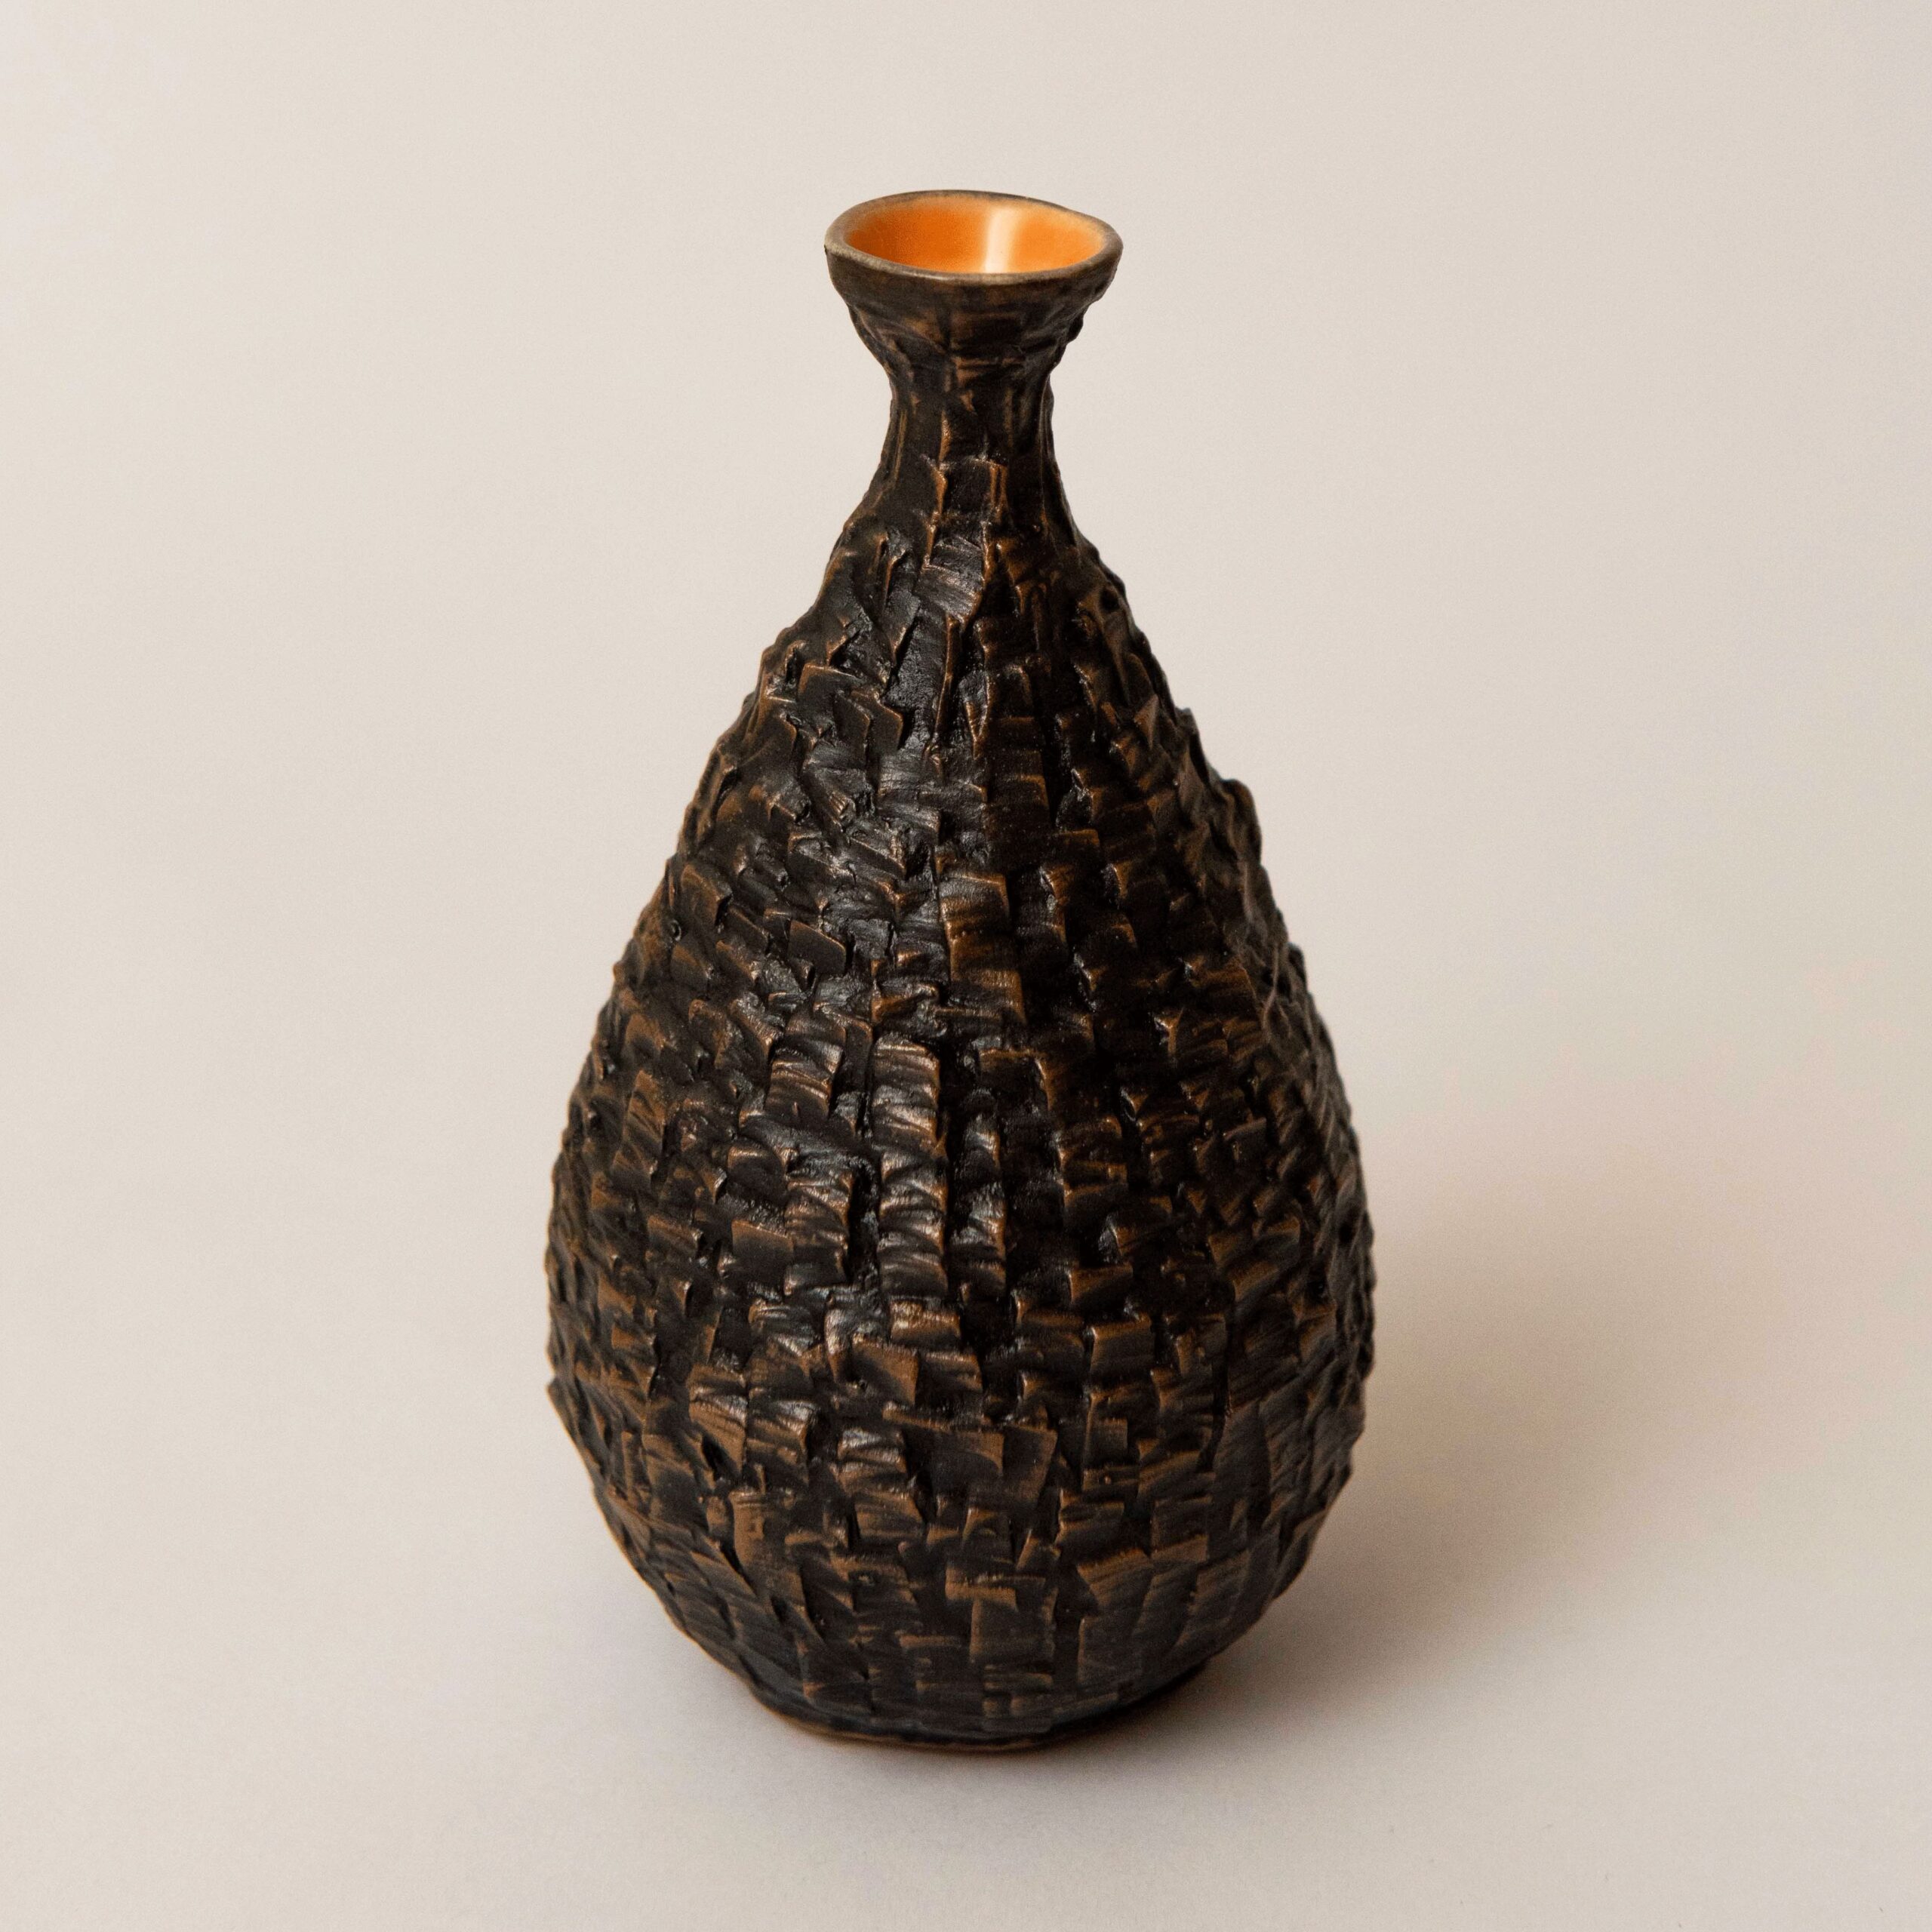 Studio Saboo: Small Rock Vase in Orange Product Image 1 of 1